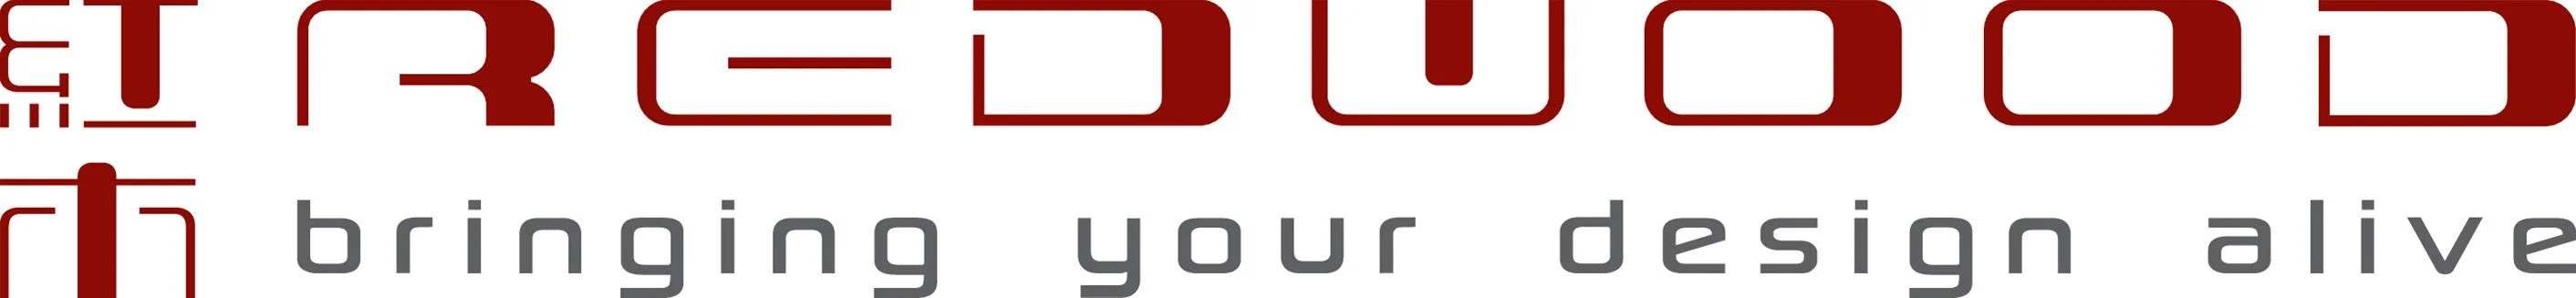 Redwood Furniture company logo - Globe3 ERP